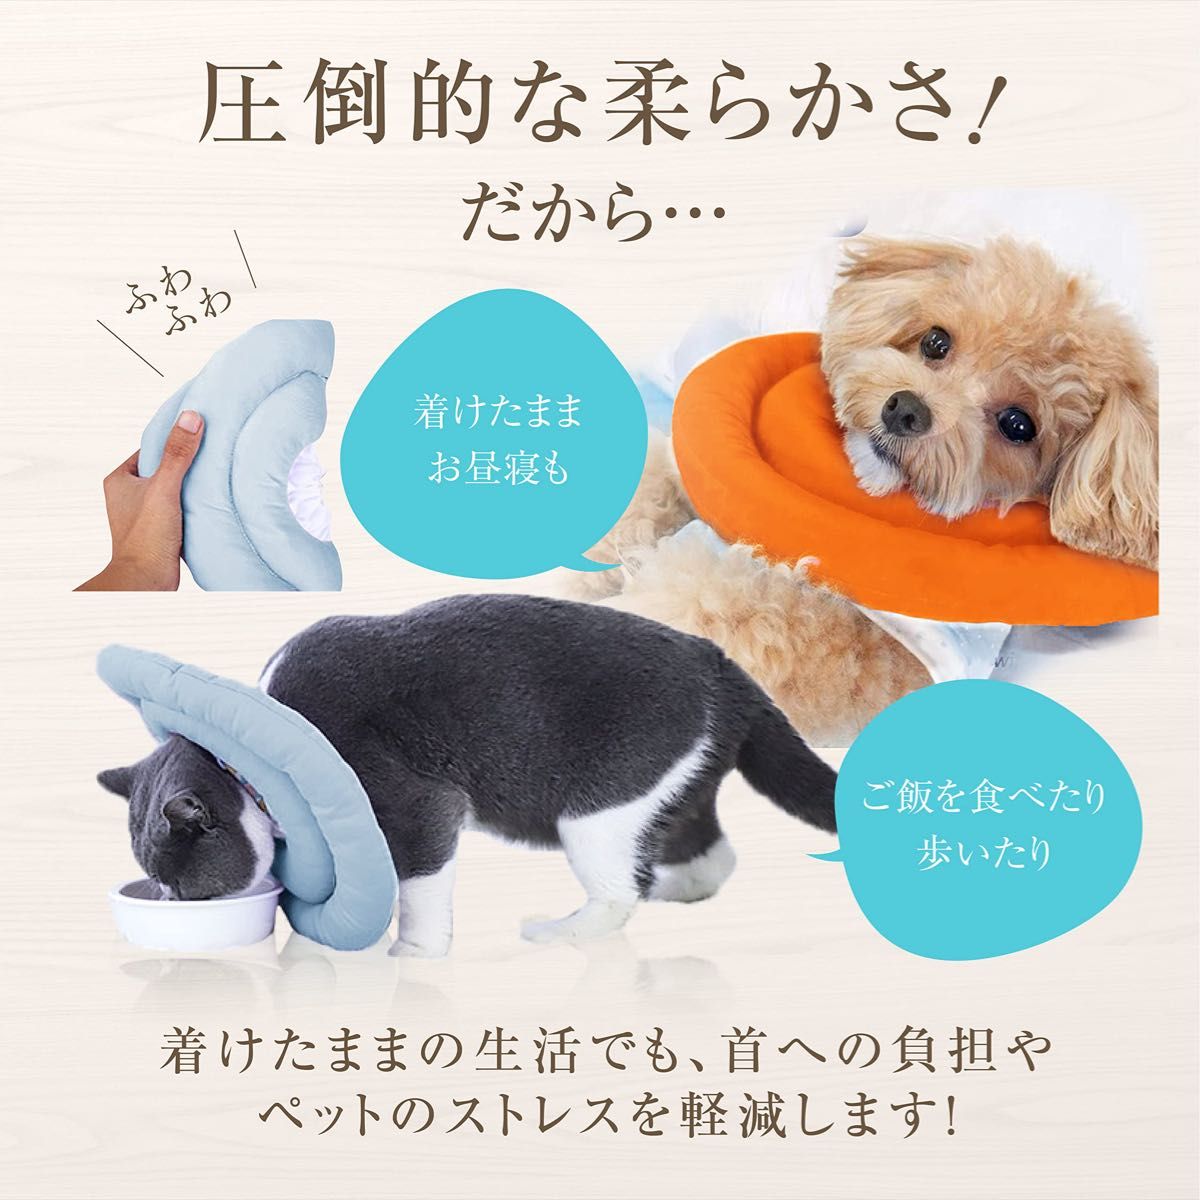  【S】エリザベスカラー 子猫 子犬 ソフト 引っ掻き防止オレンジ